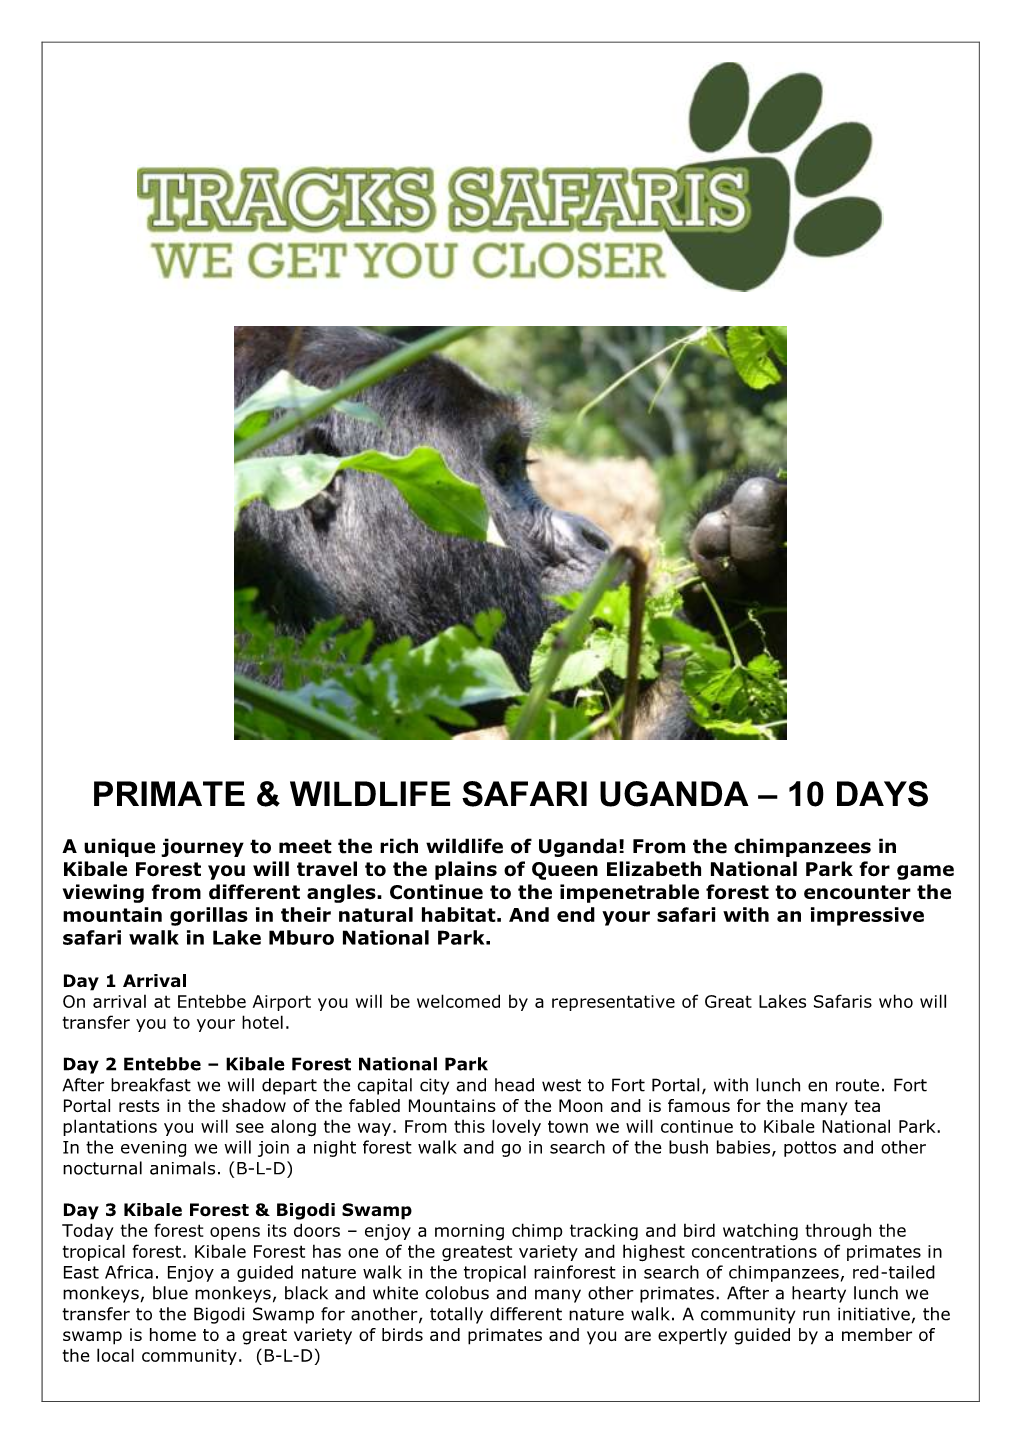 Primate & Wildlife Safari Uganda